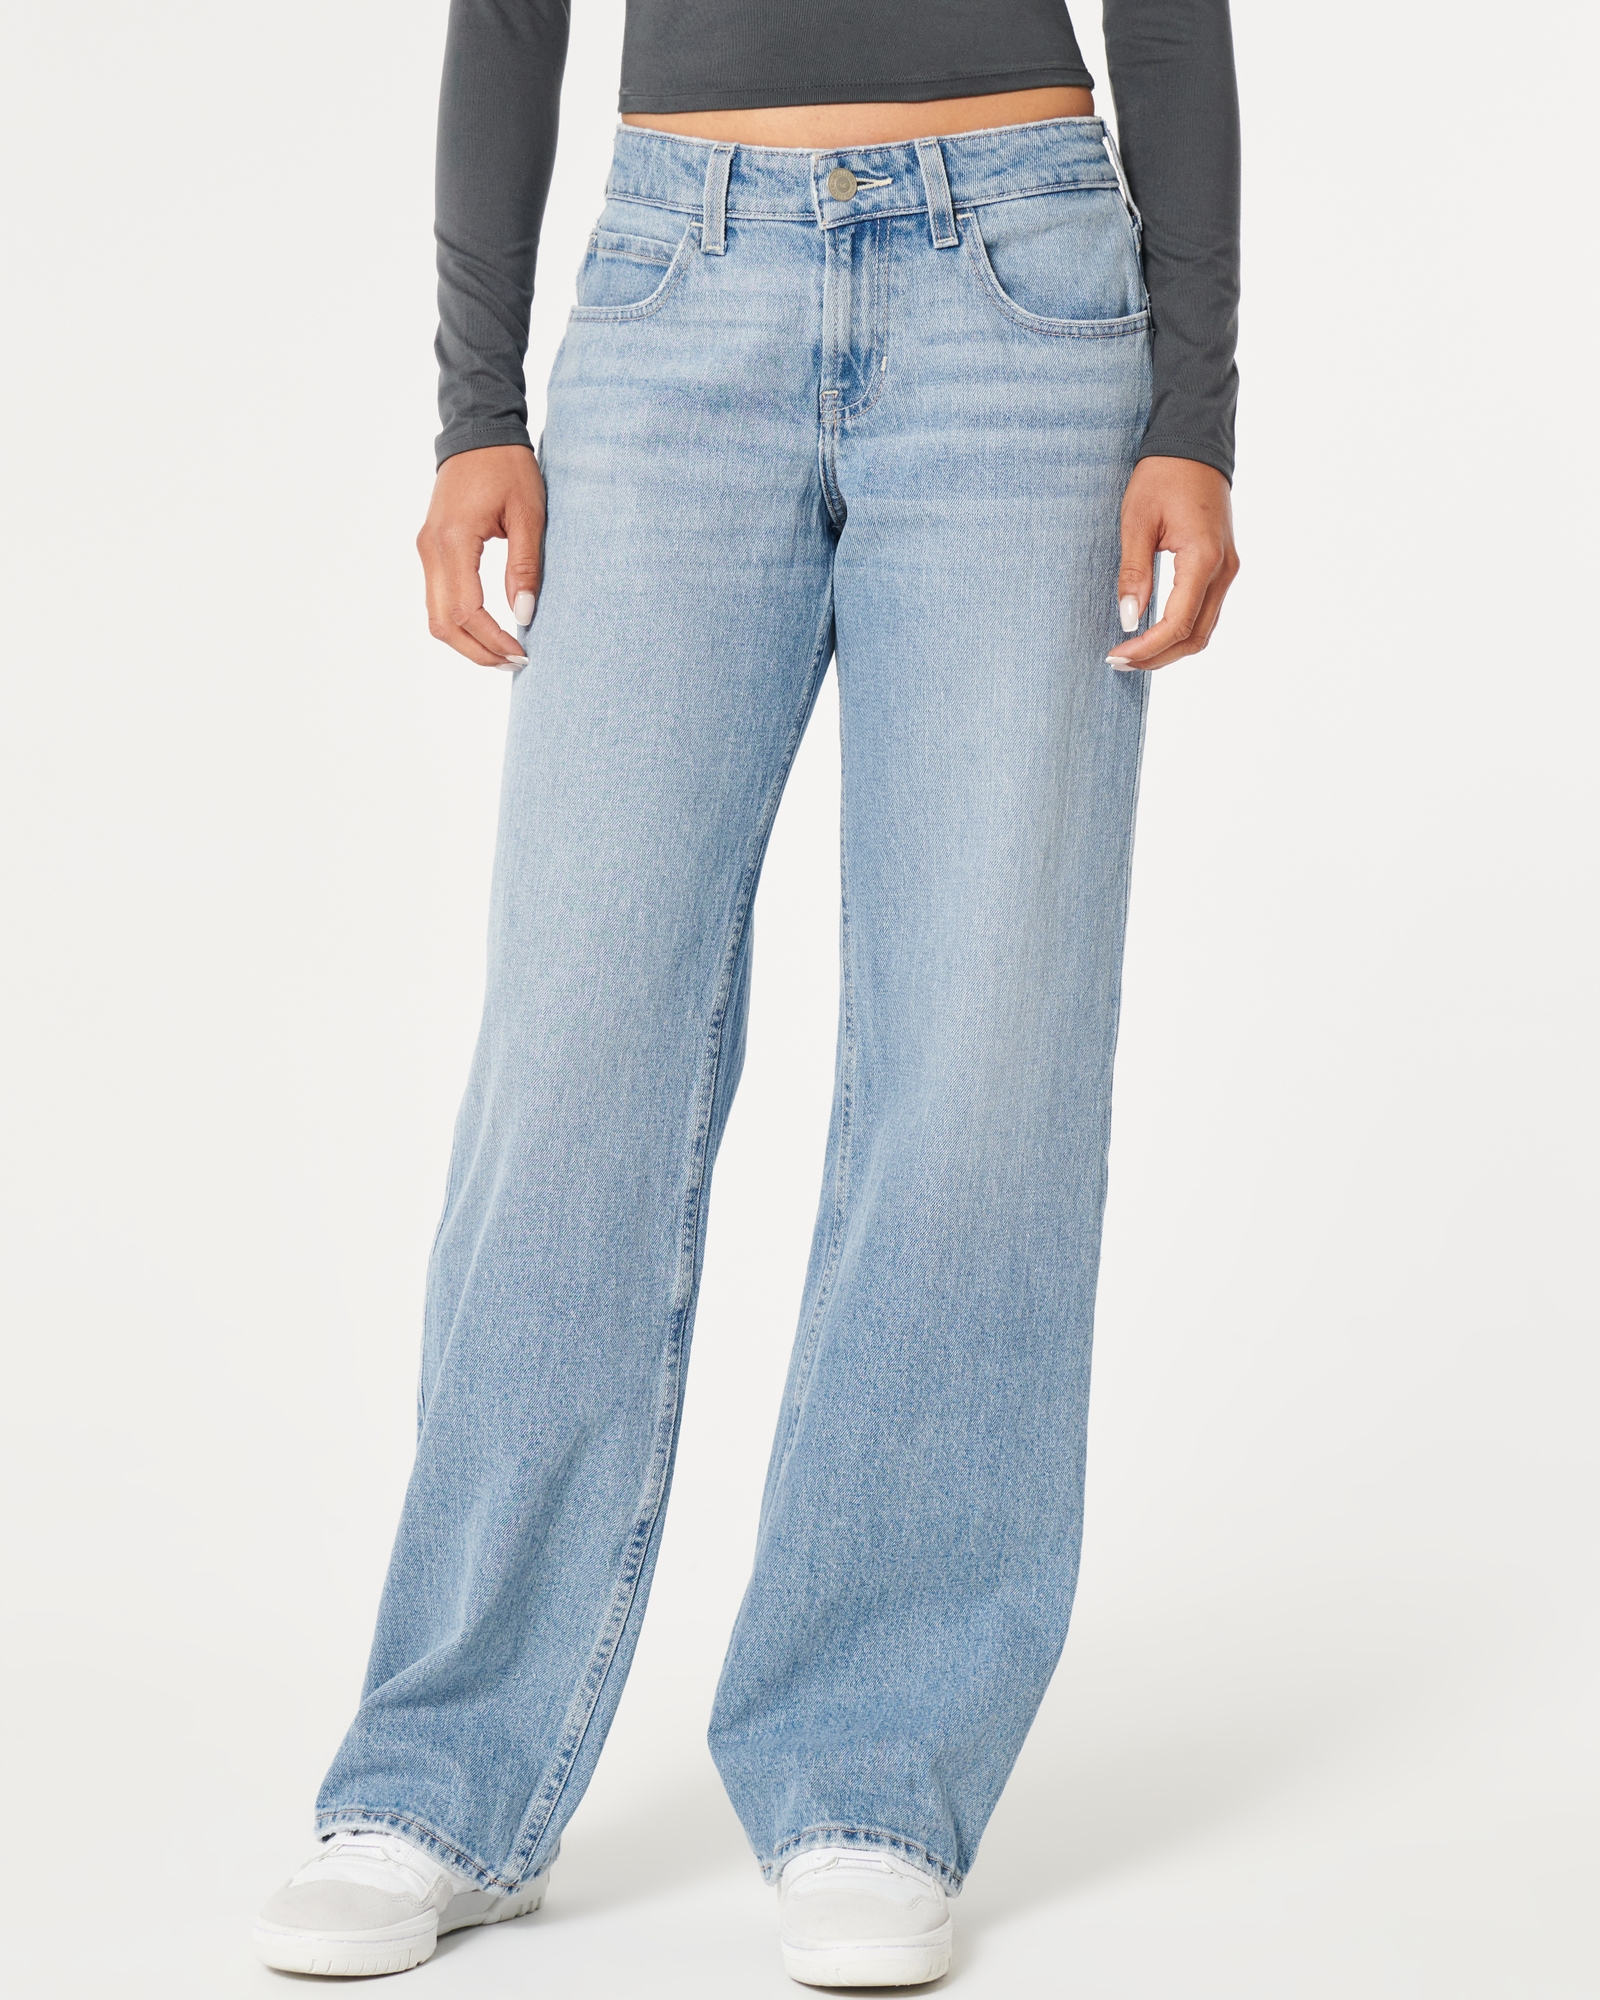 Hollister Jeans Women's Size 7 Short Low Rise Jean Jeggings. Good